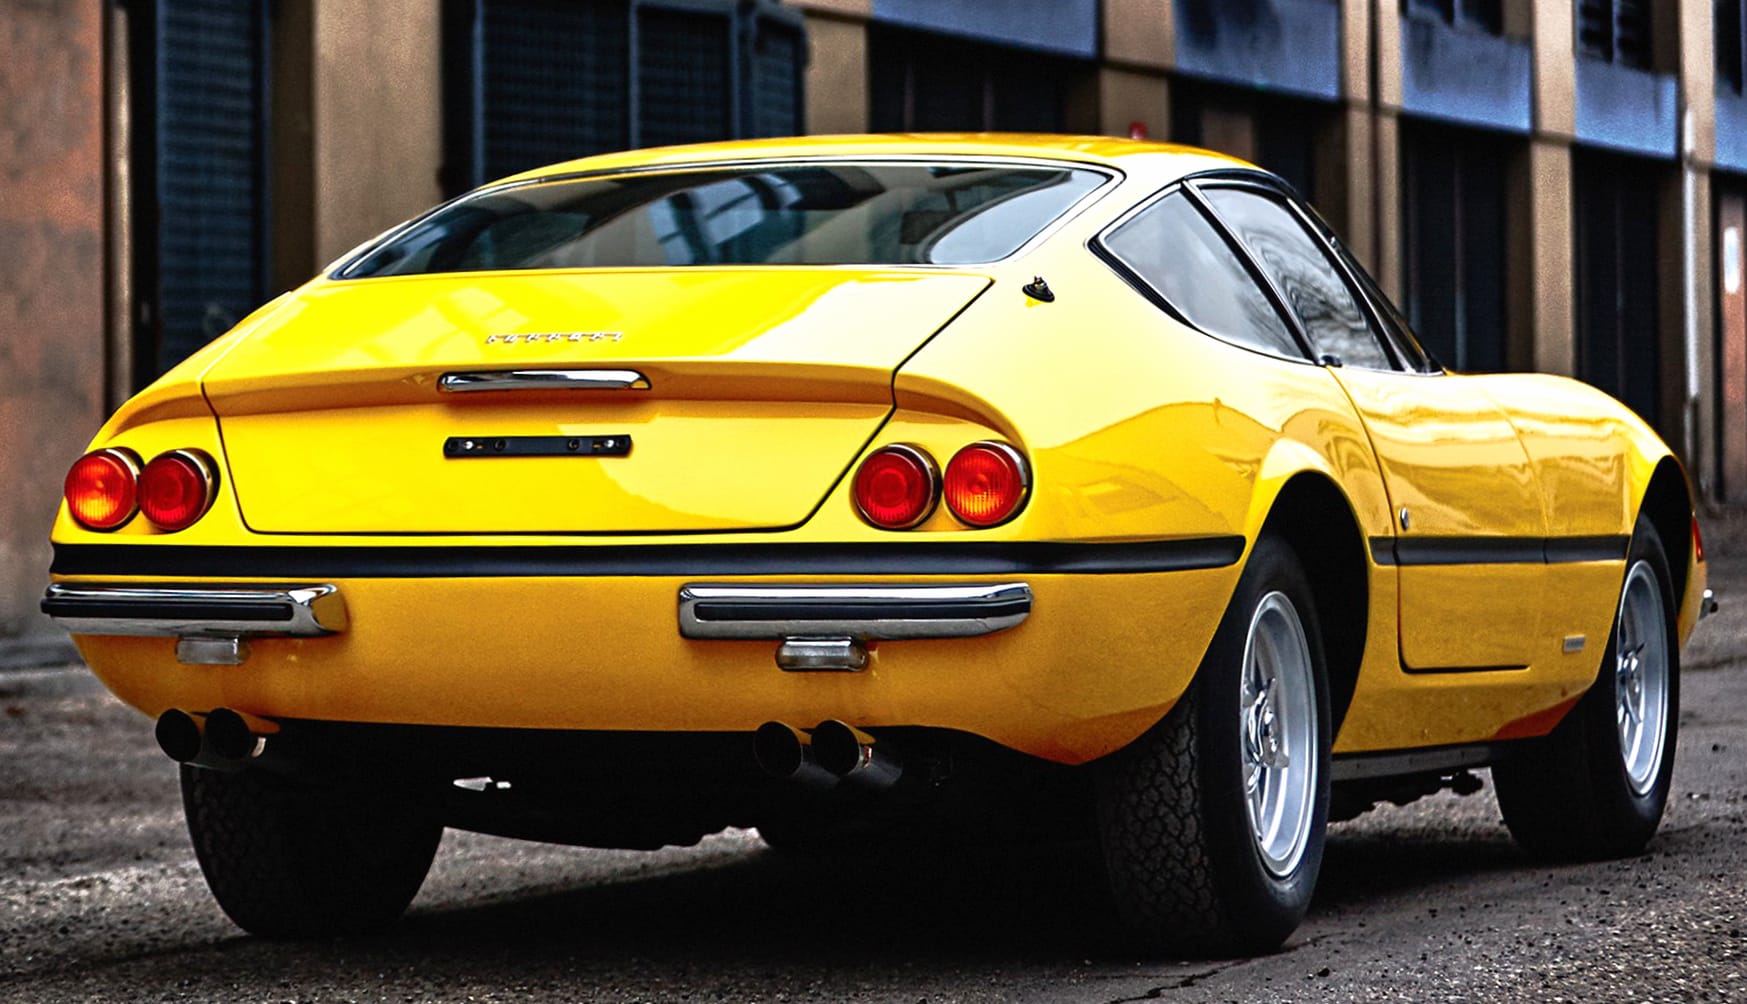 Ferrari 365 GTB 4 Daytona at 640 x 960 iPhone 4 size wallpapers HD quality